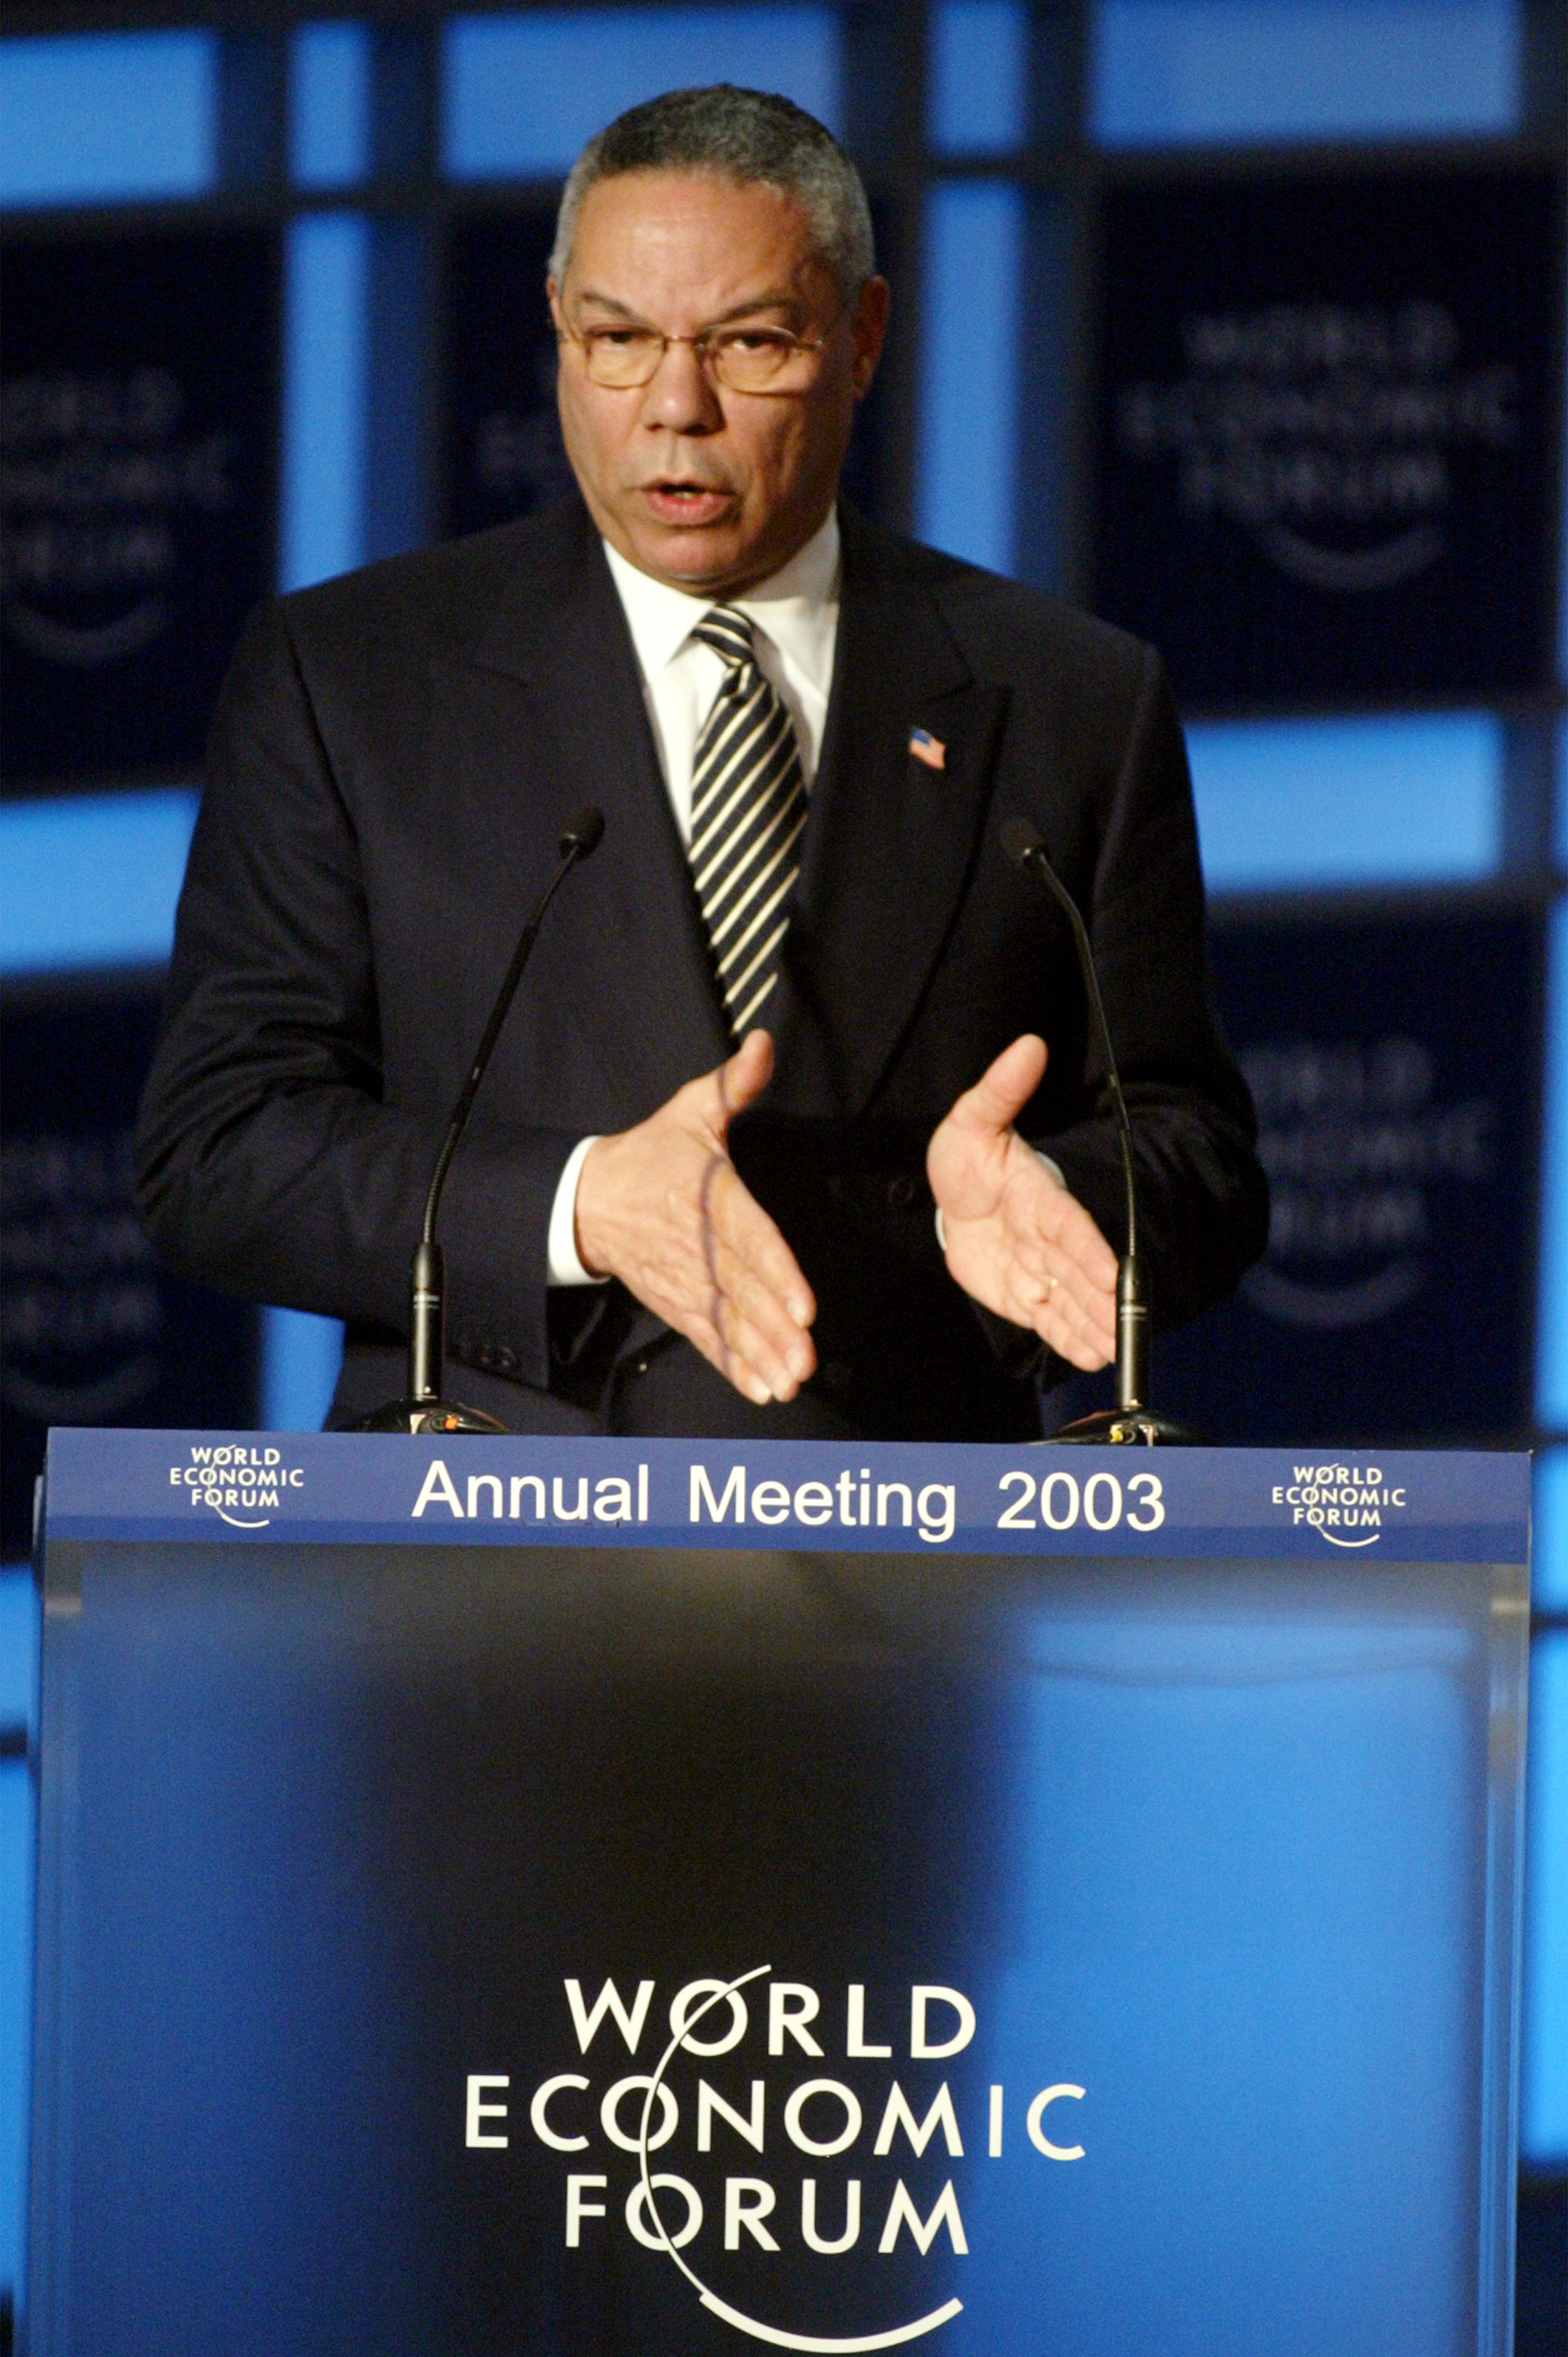 Colin Powell photo #99878, Colin Powell image